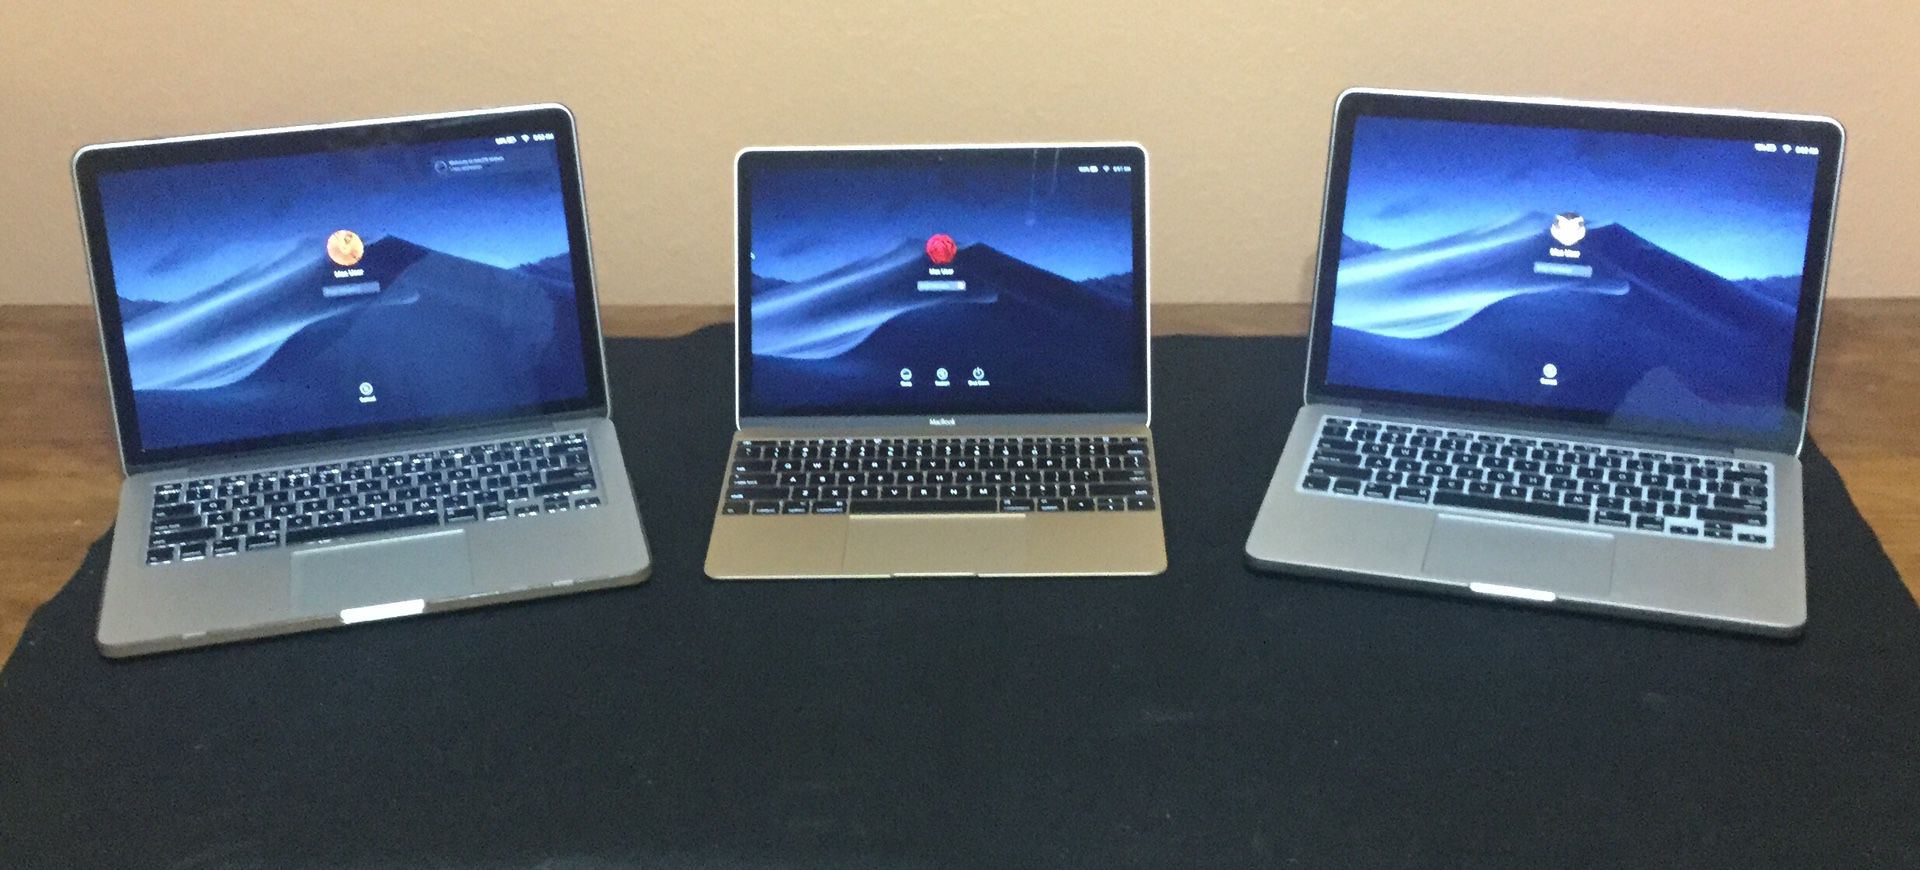 MacBook Pros and a Macbook